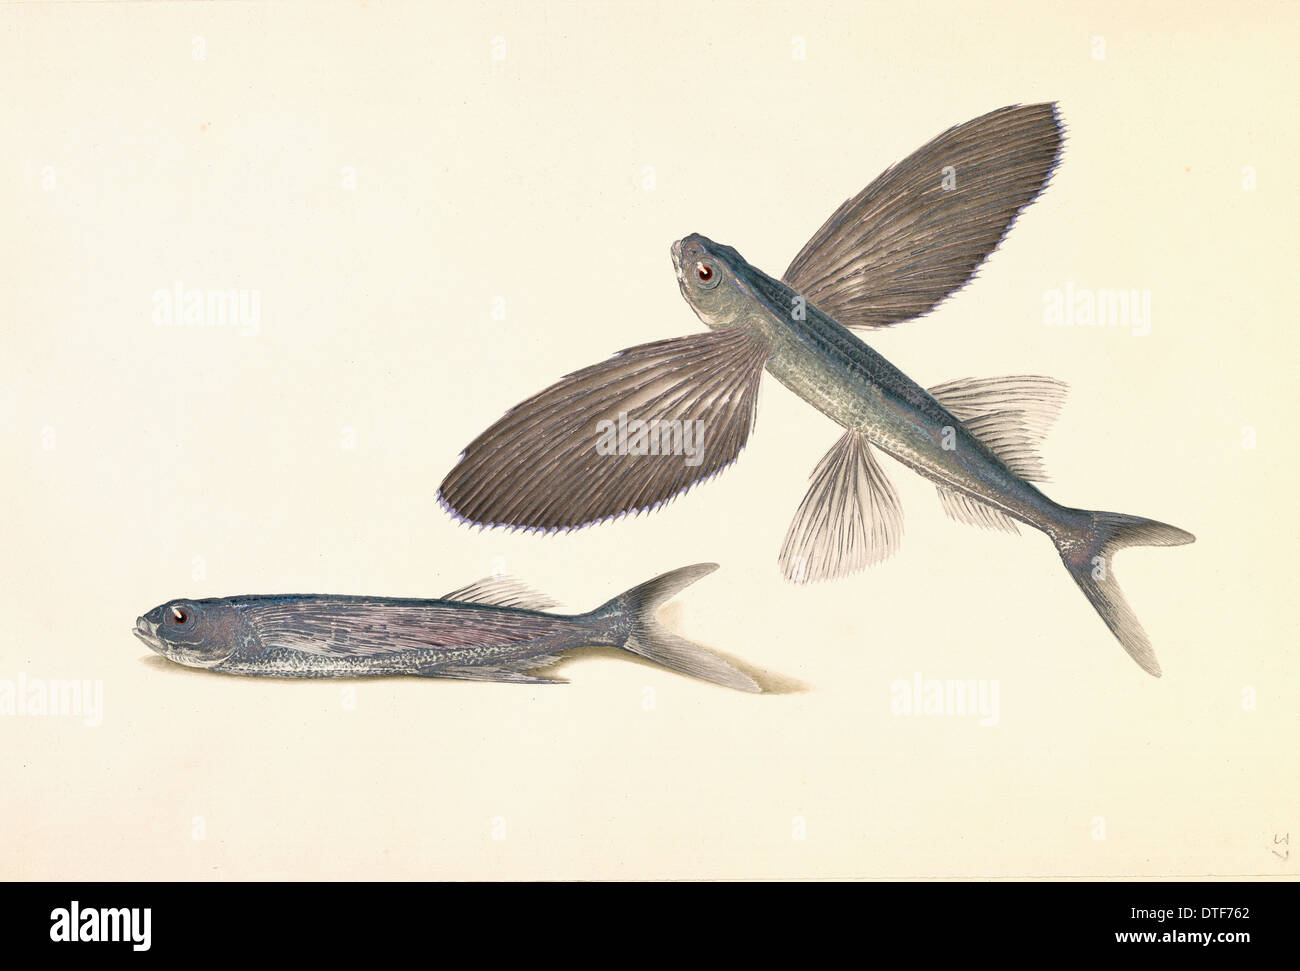 Cheilopogon sp., flyingfish Stock Photo